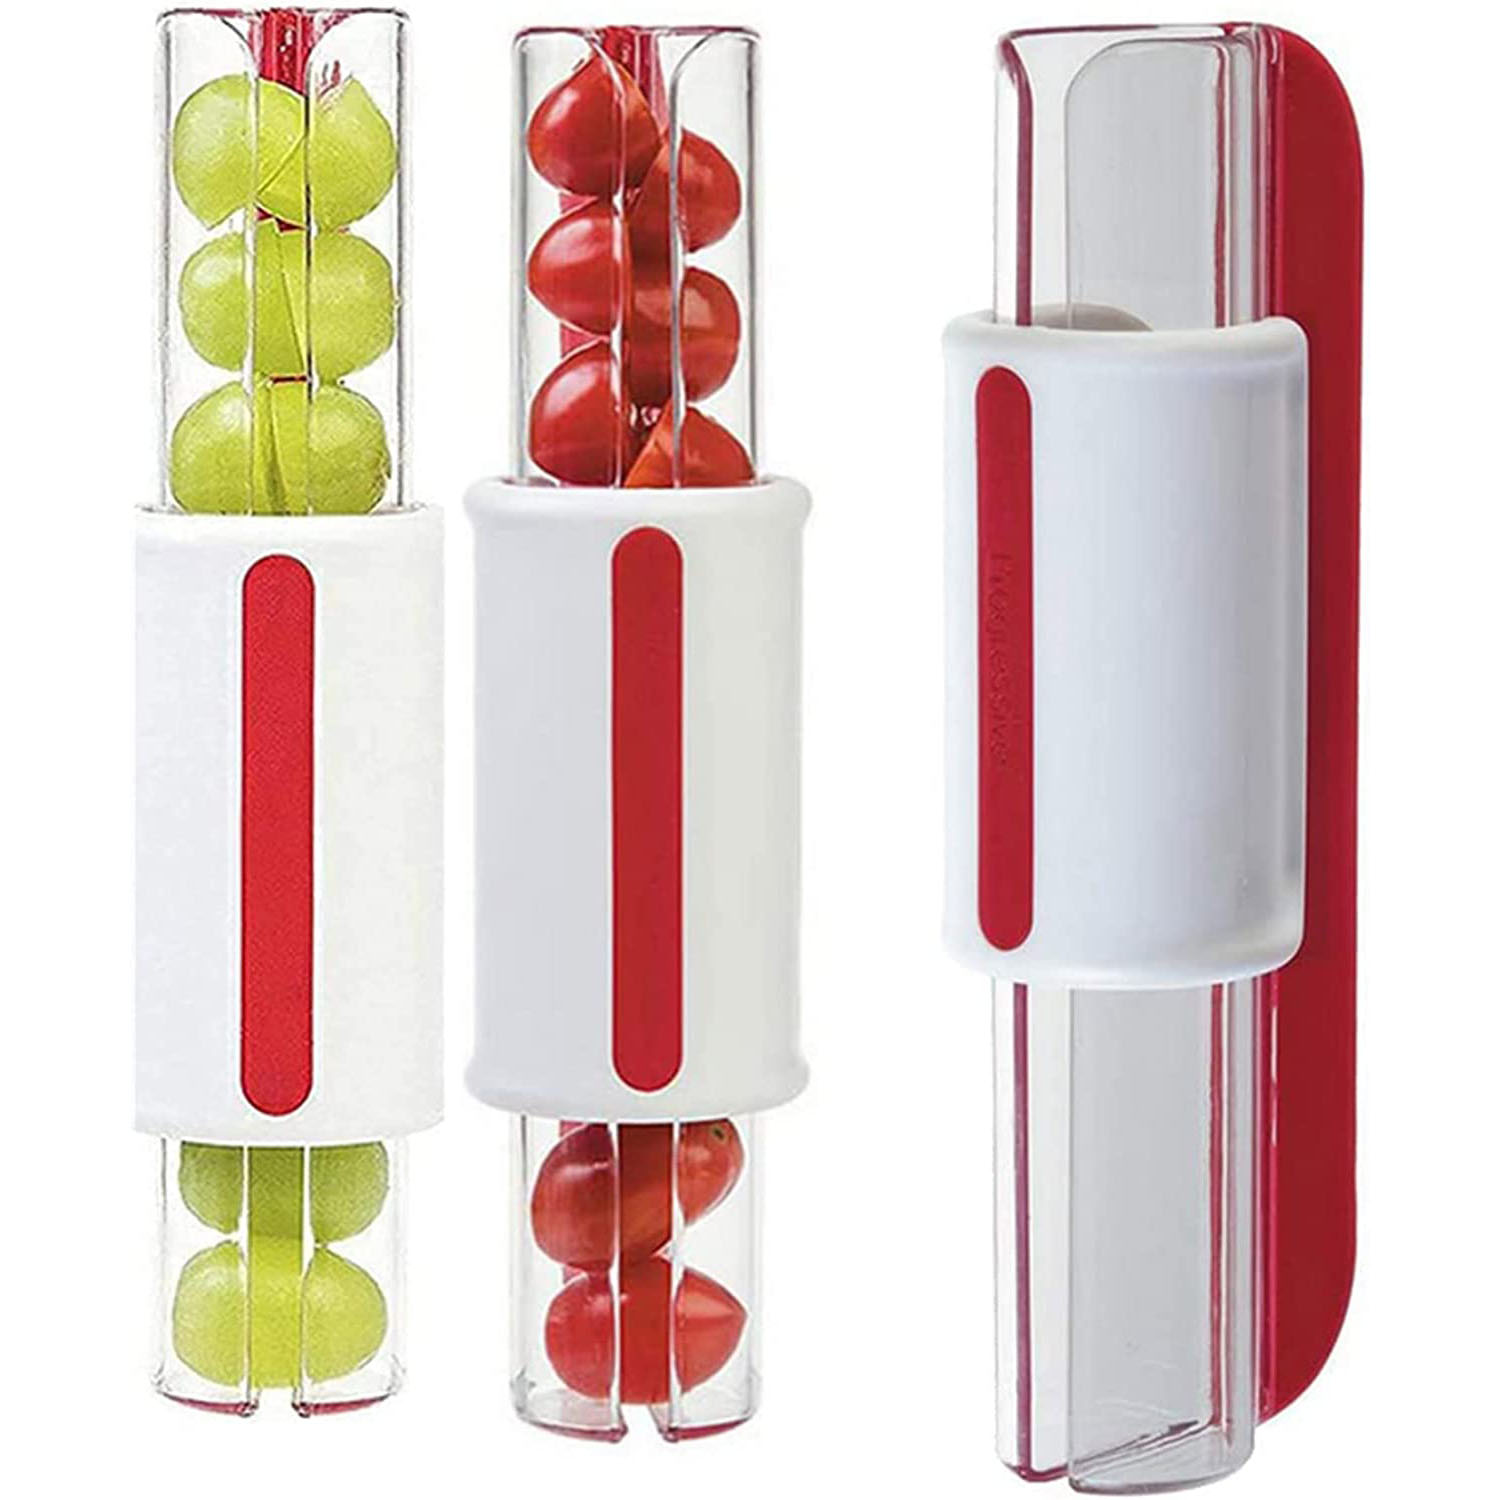 1pc PP Material Tomatoes Grapes Slicer For Salad Fruit, Practical Kitchen  Tool Peeler Cutter Chopper Divider, Randomly Send 3 Colors